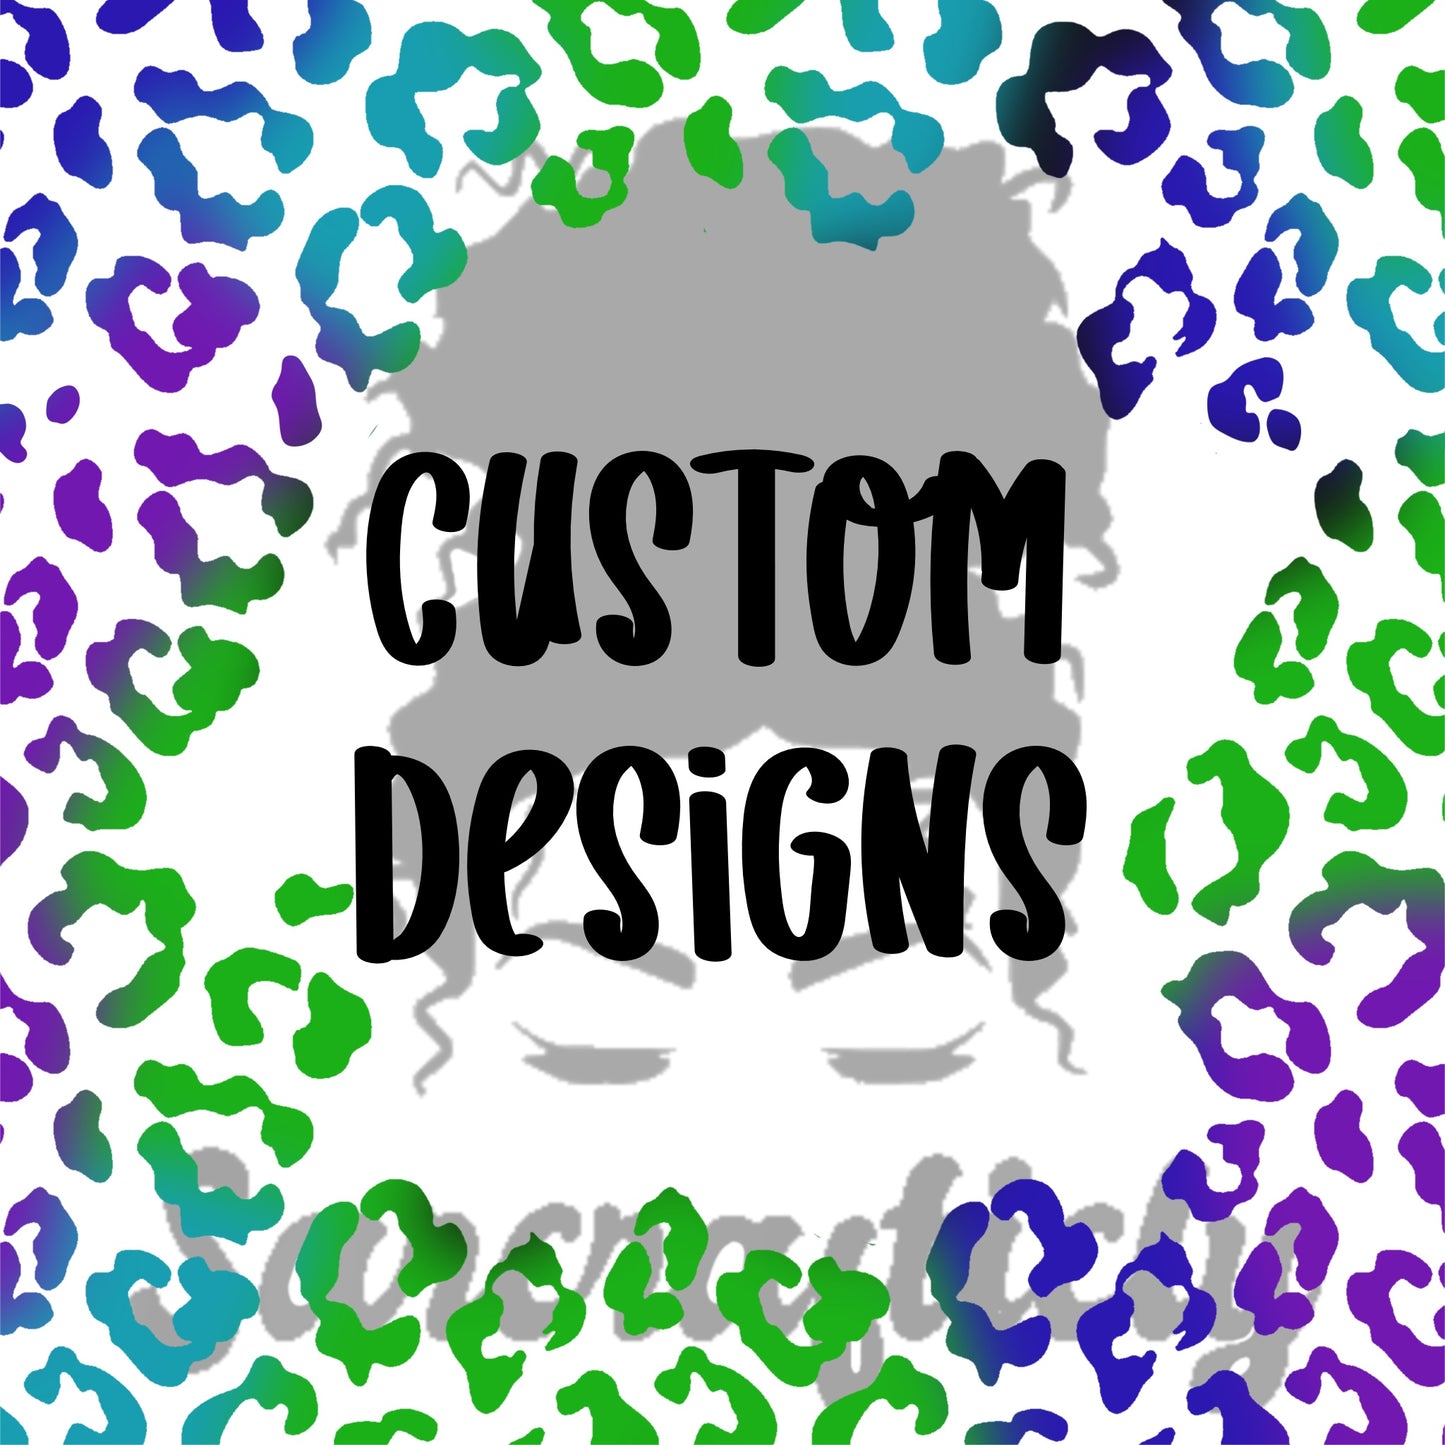 Custom Designs